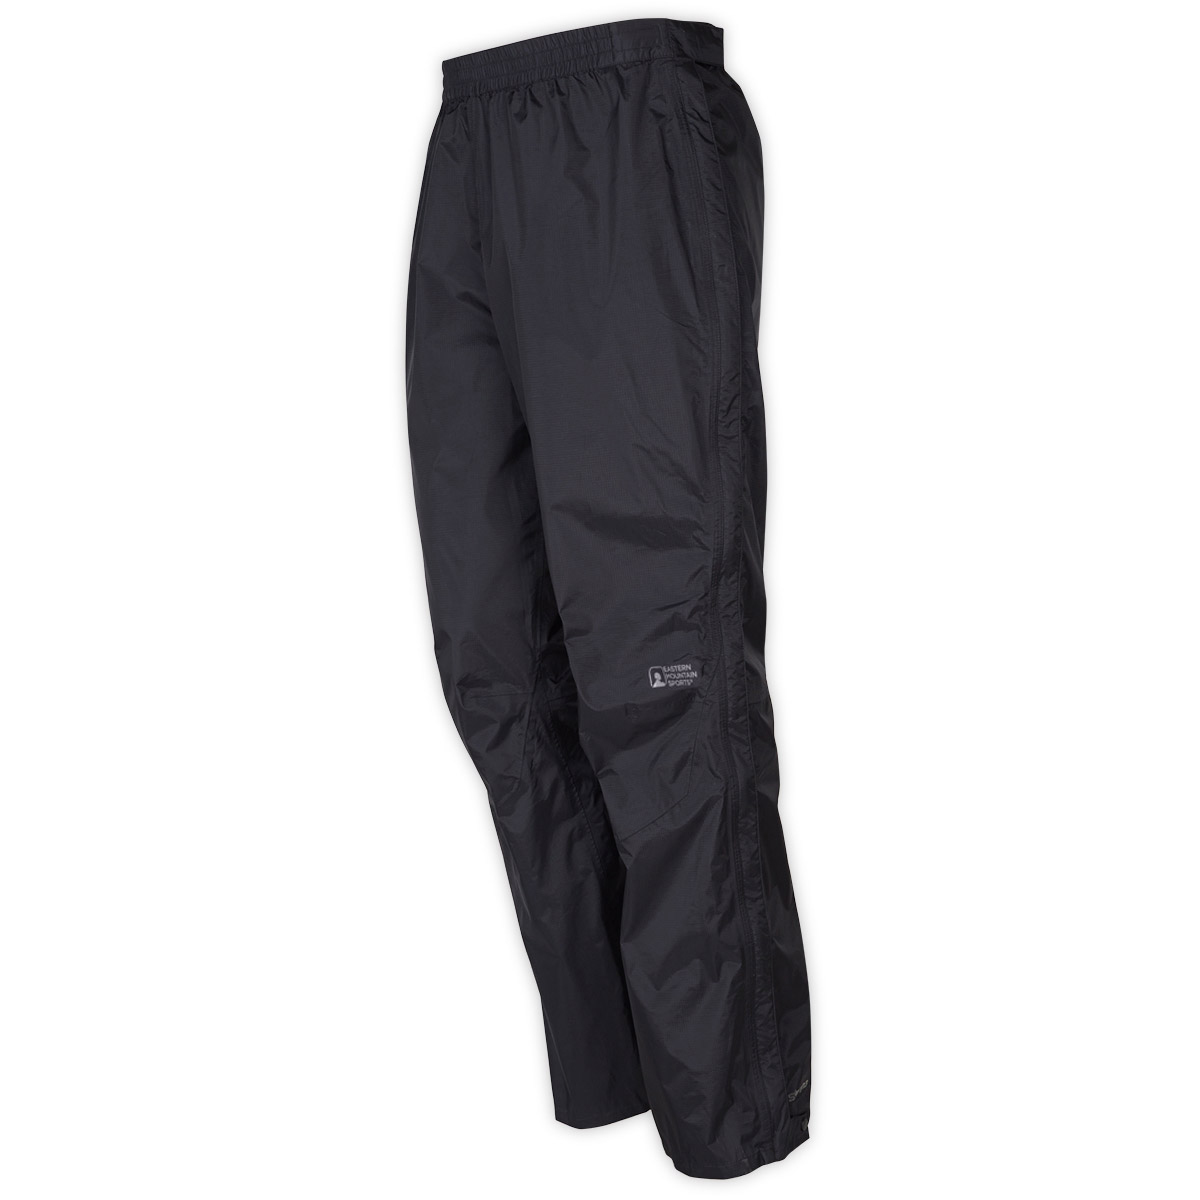 Ems Men's Thunderhead Full-Zip Rain Pants - Black, XL/R